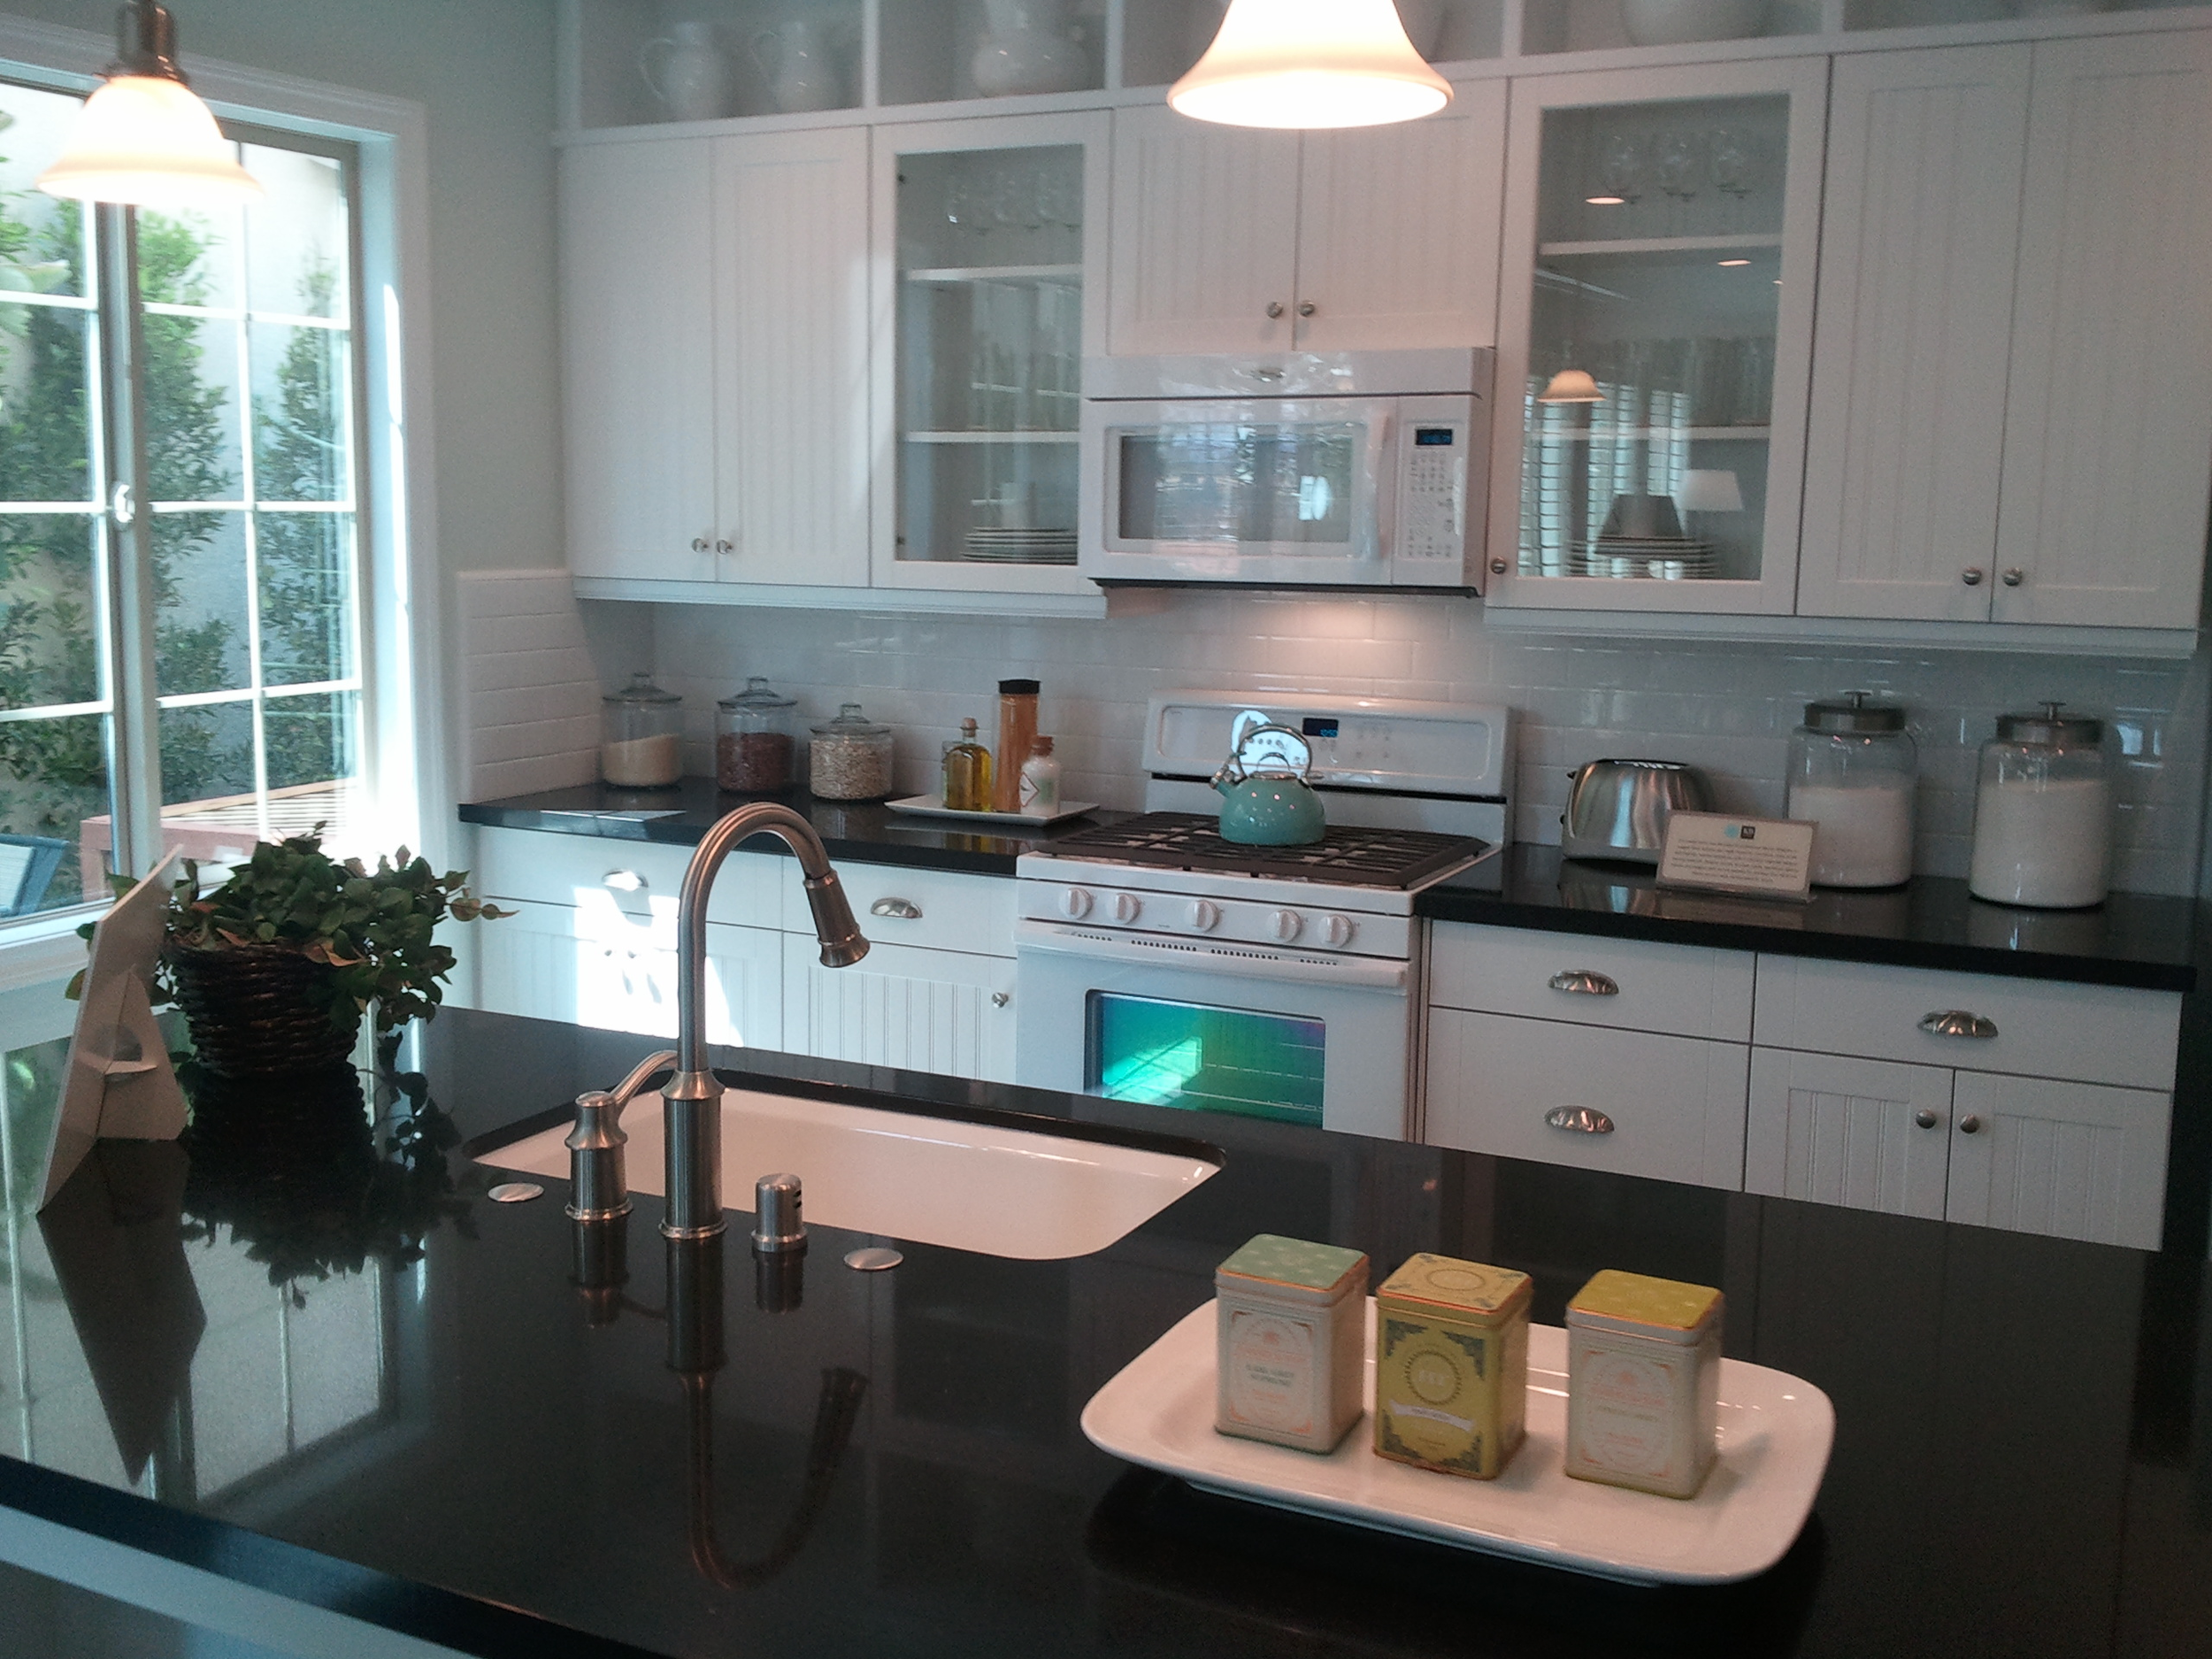 Residential: Kitchen + Sink Countertops